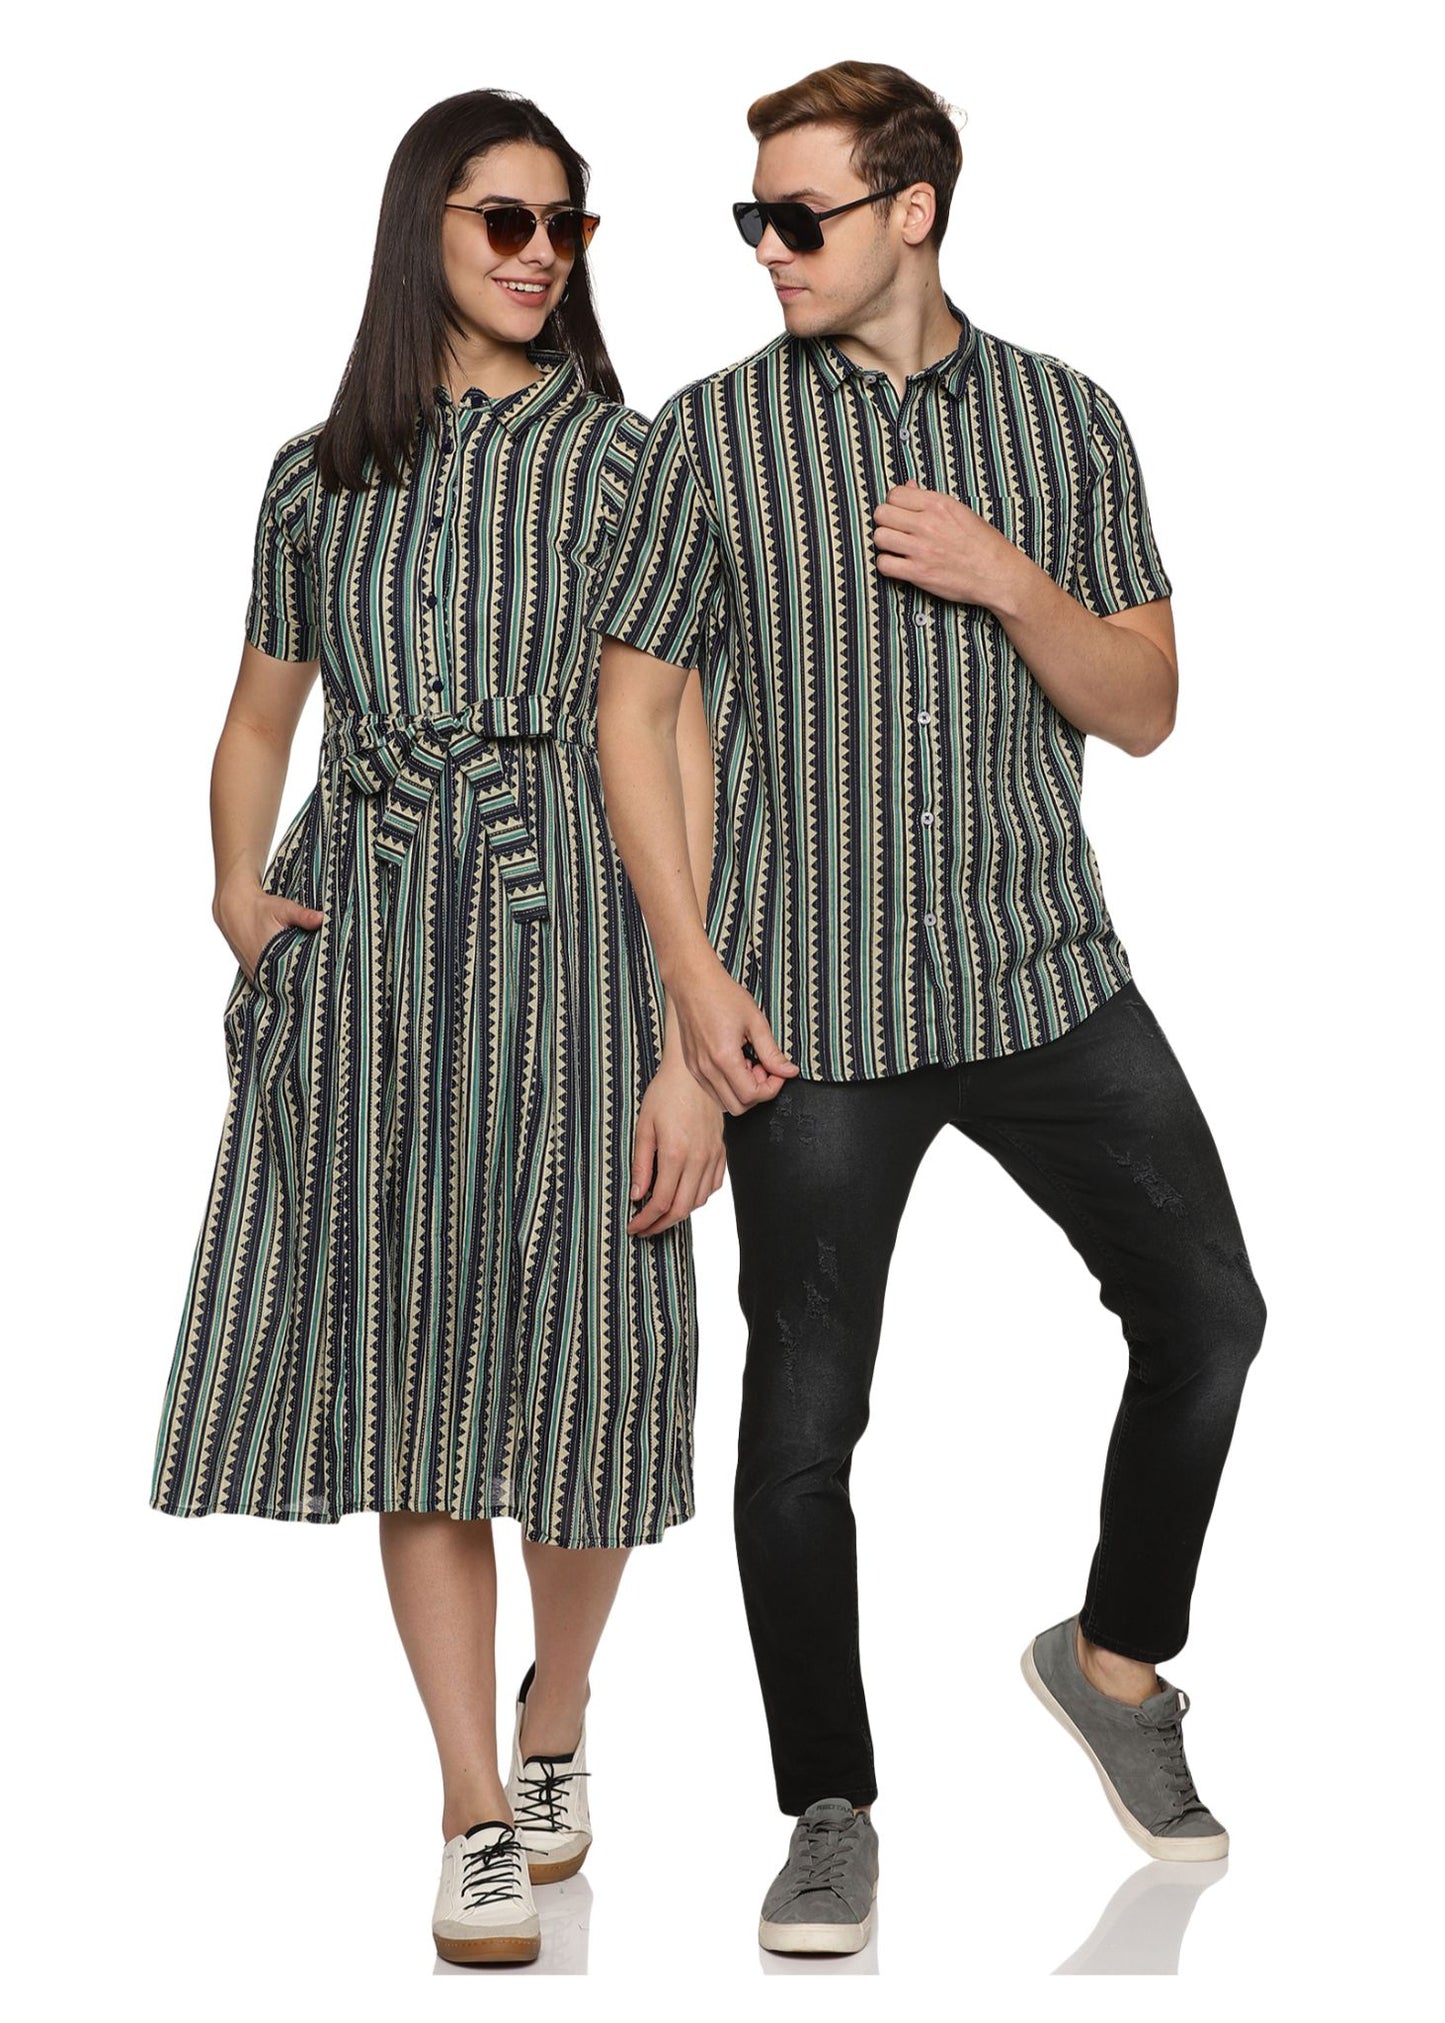 Hamilton Katha Couple Matching Shirt and Dress